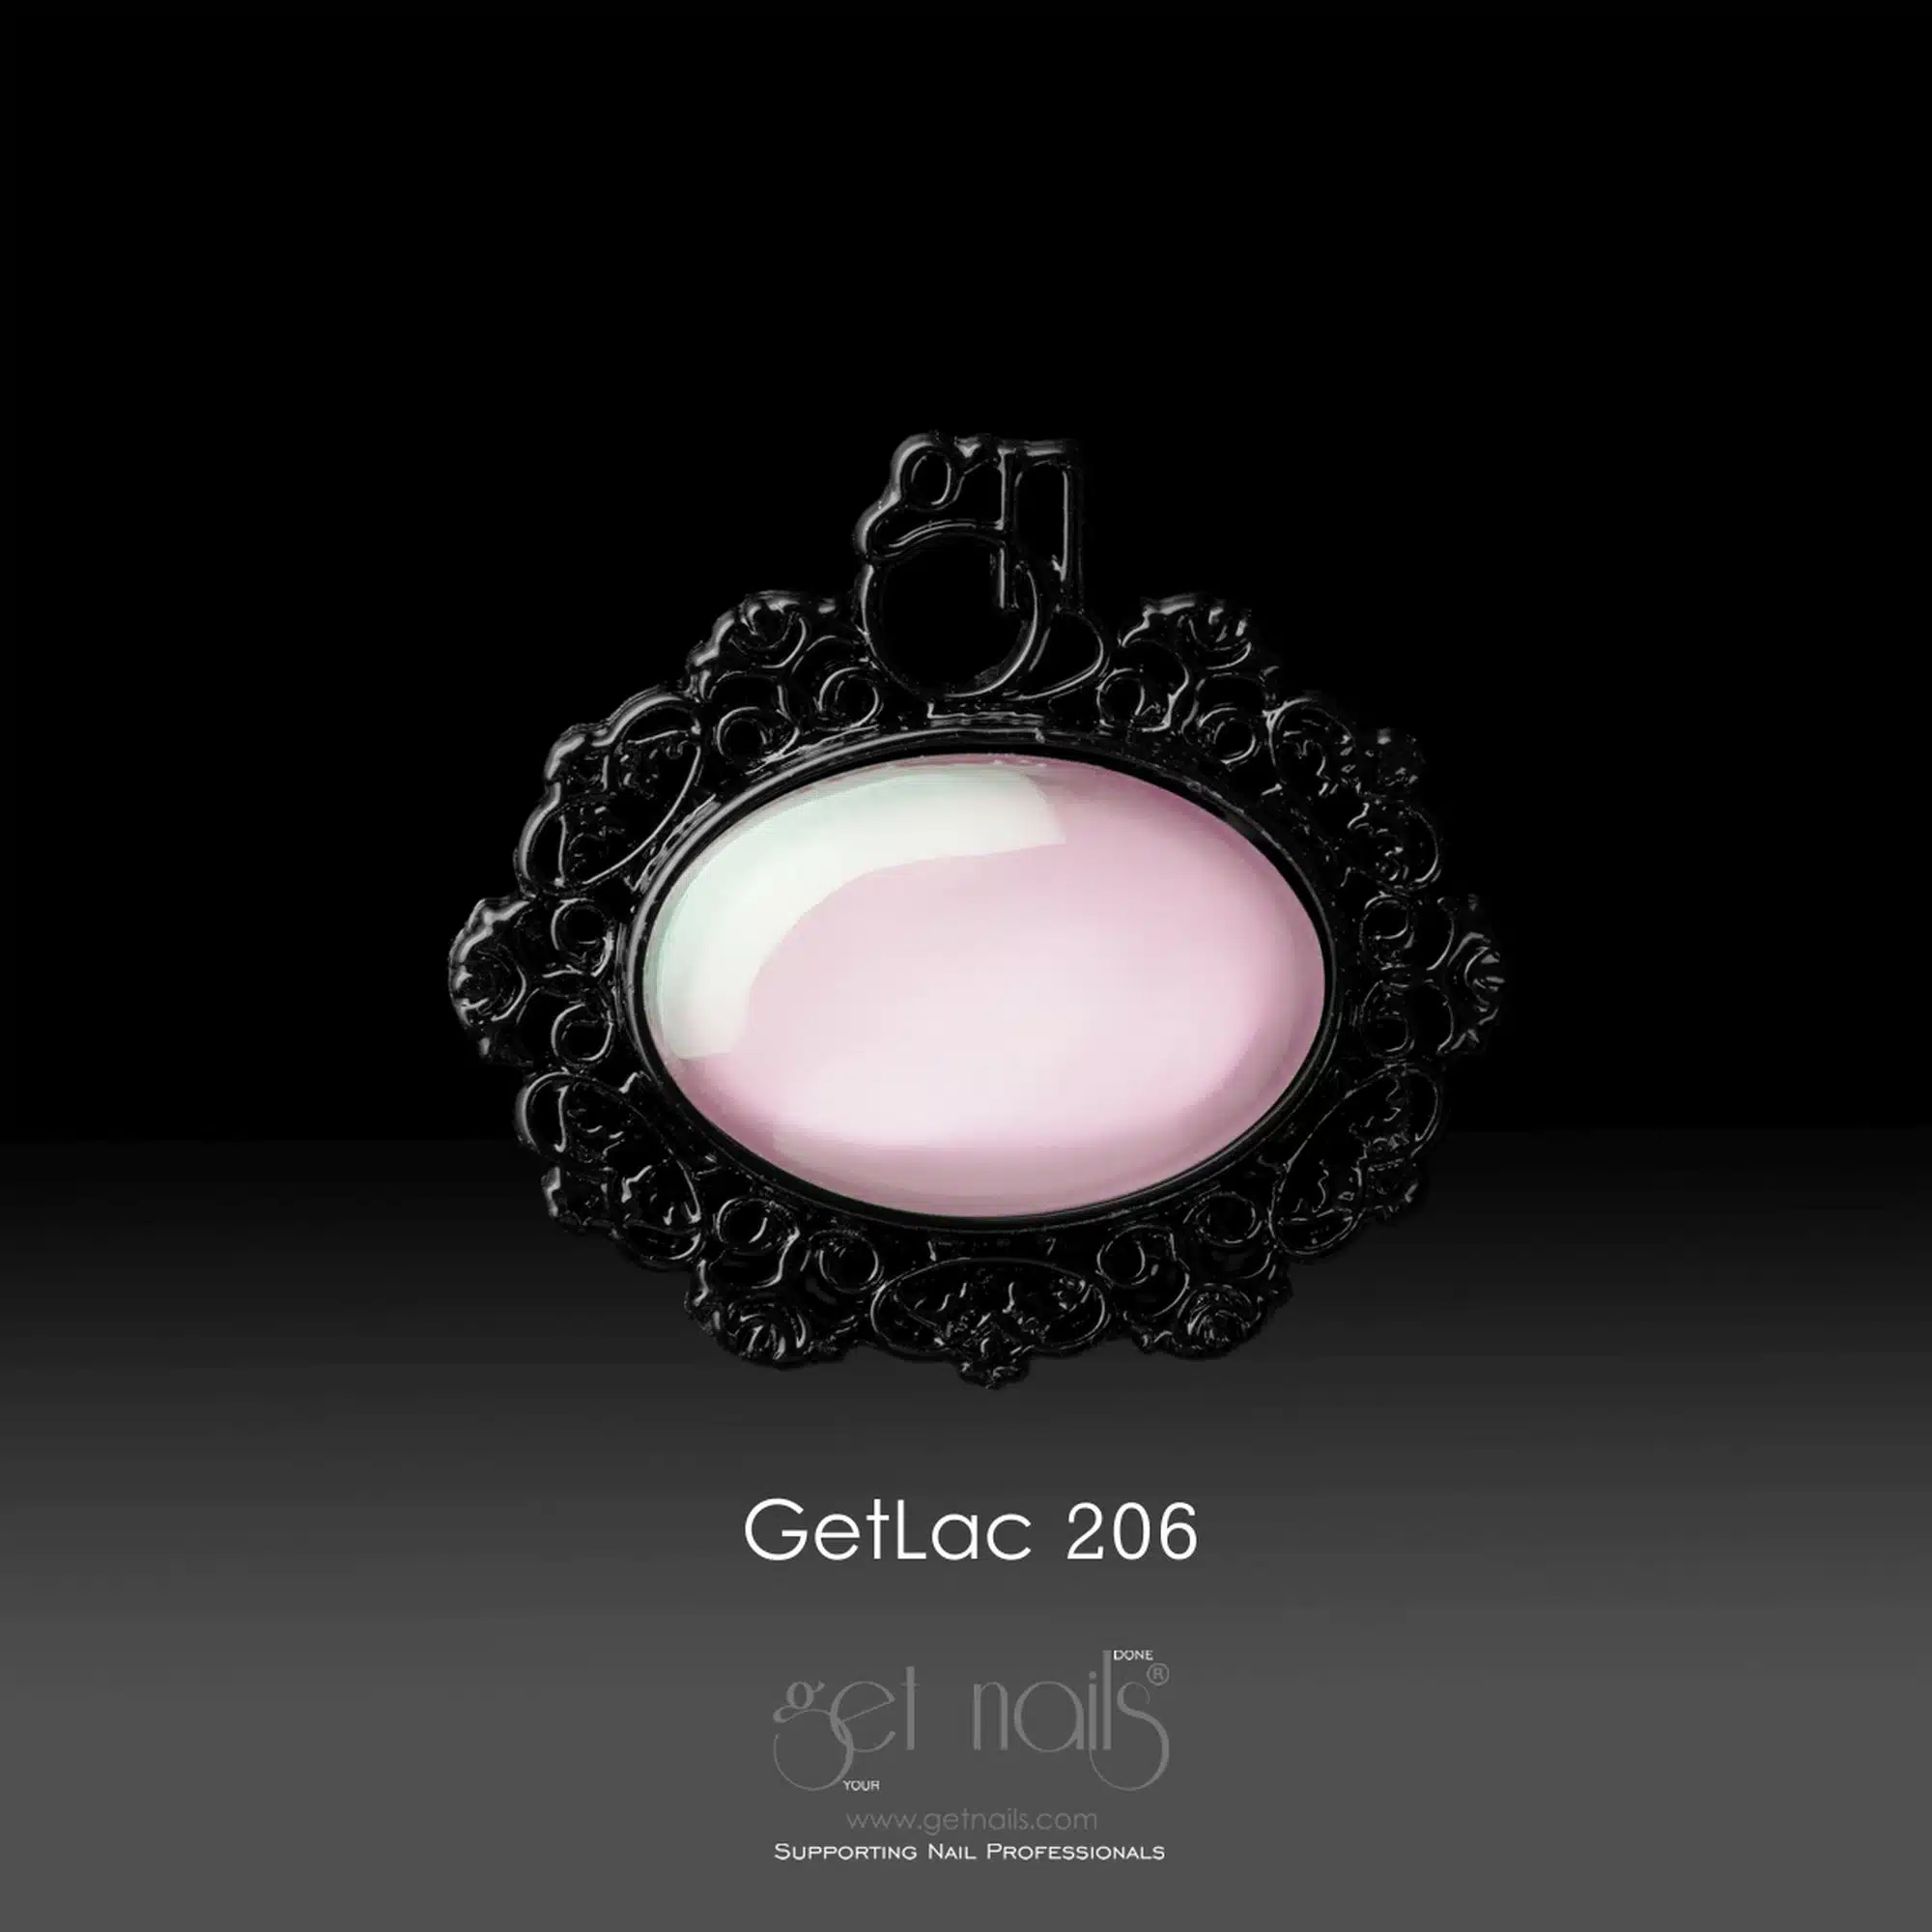 Get Nails Austria - GetLac 206 Candy Macaroon 15 g